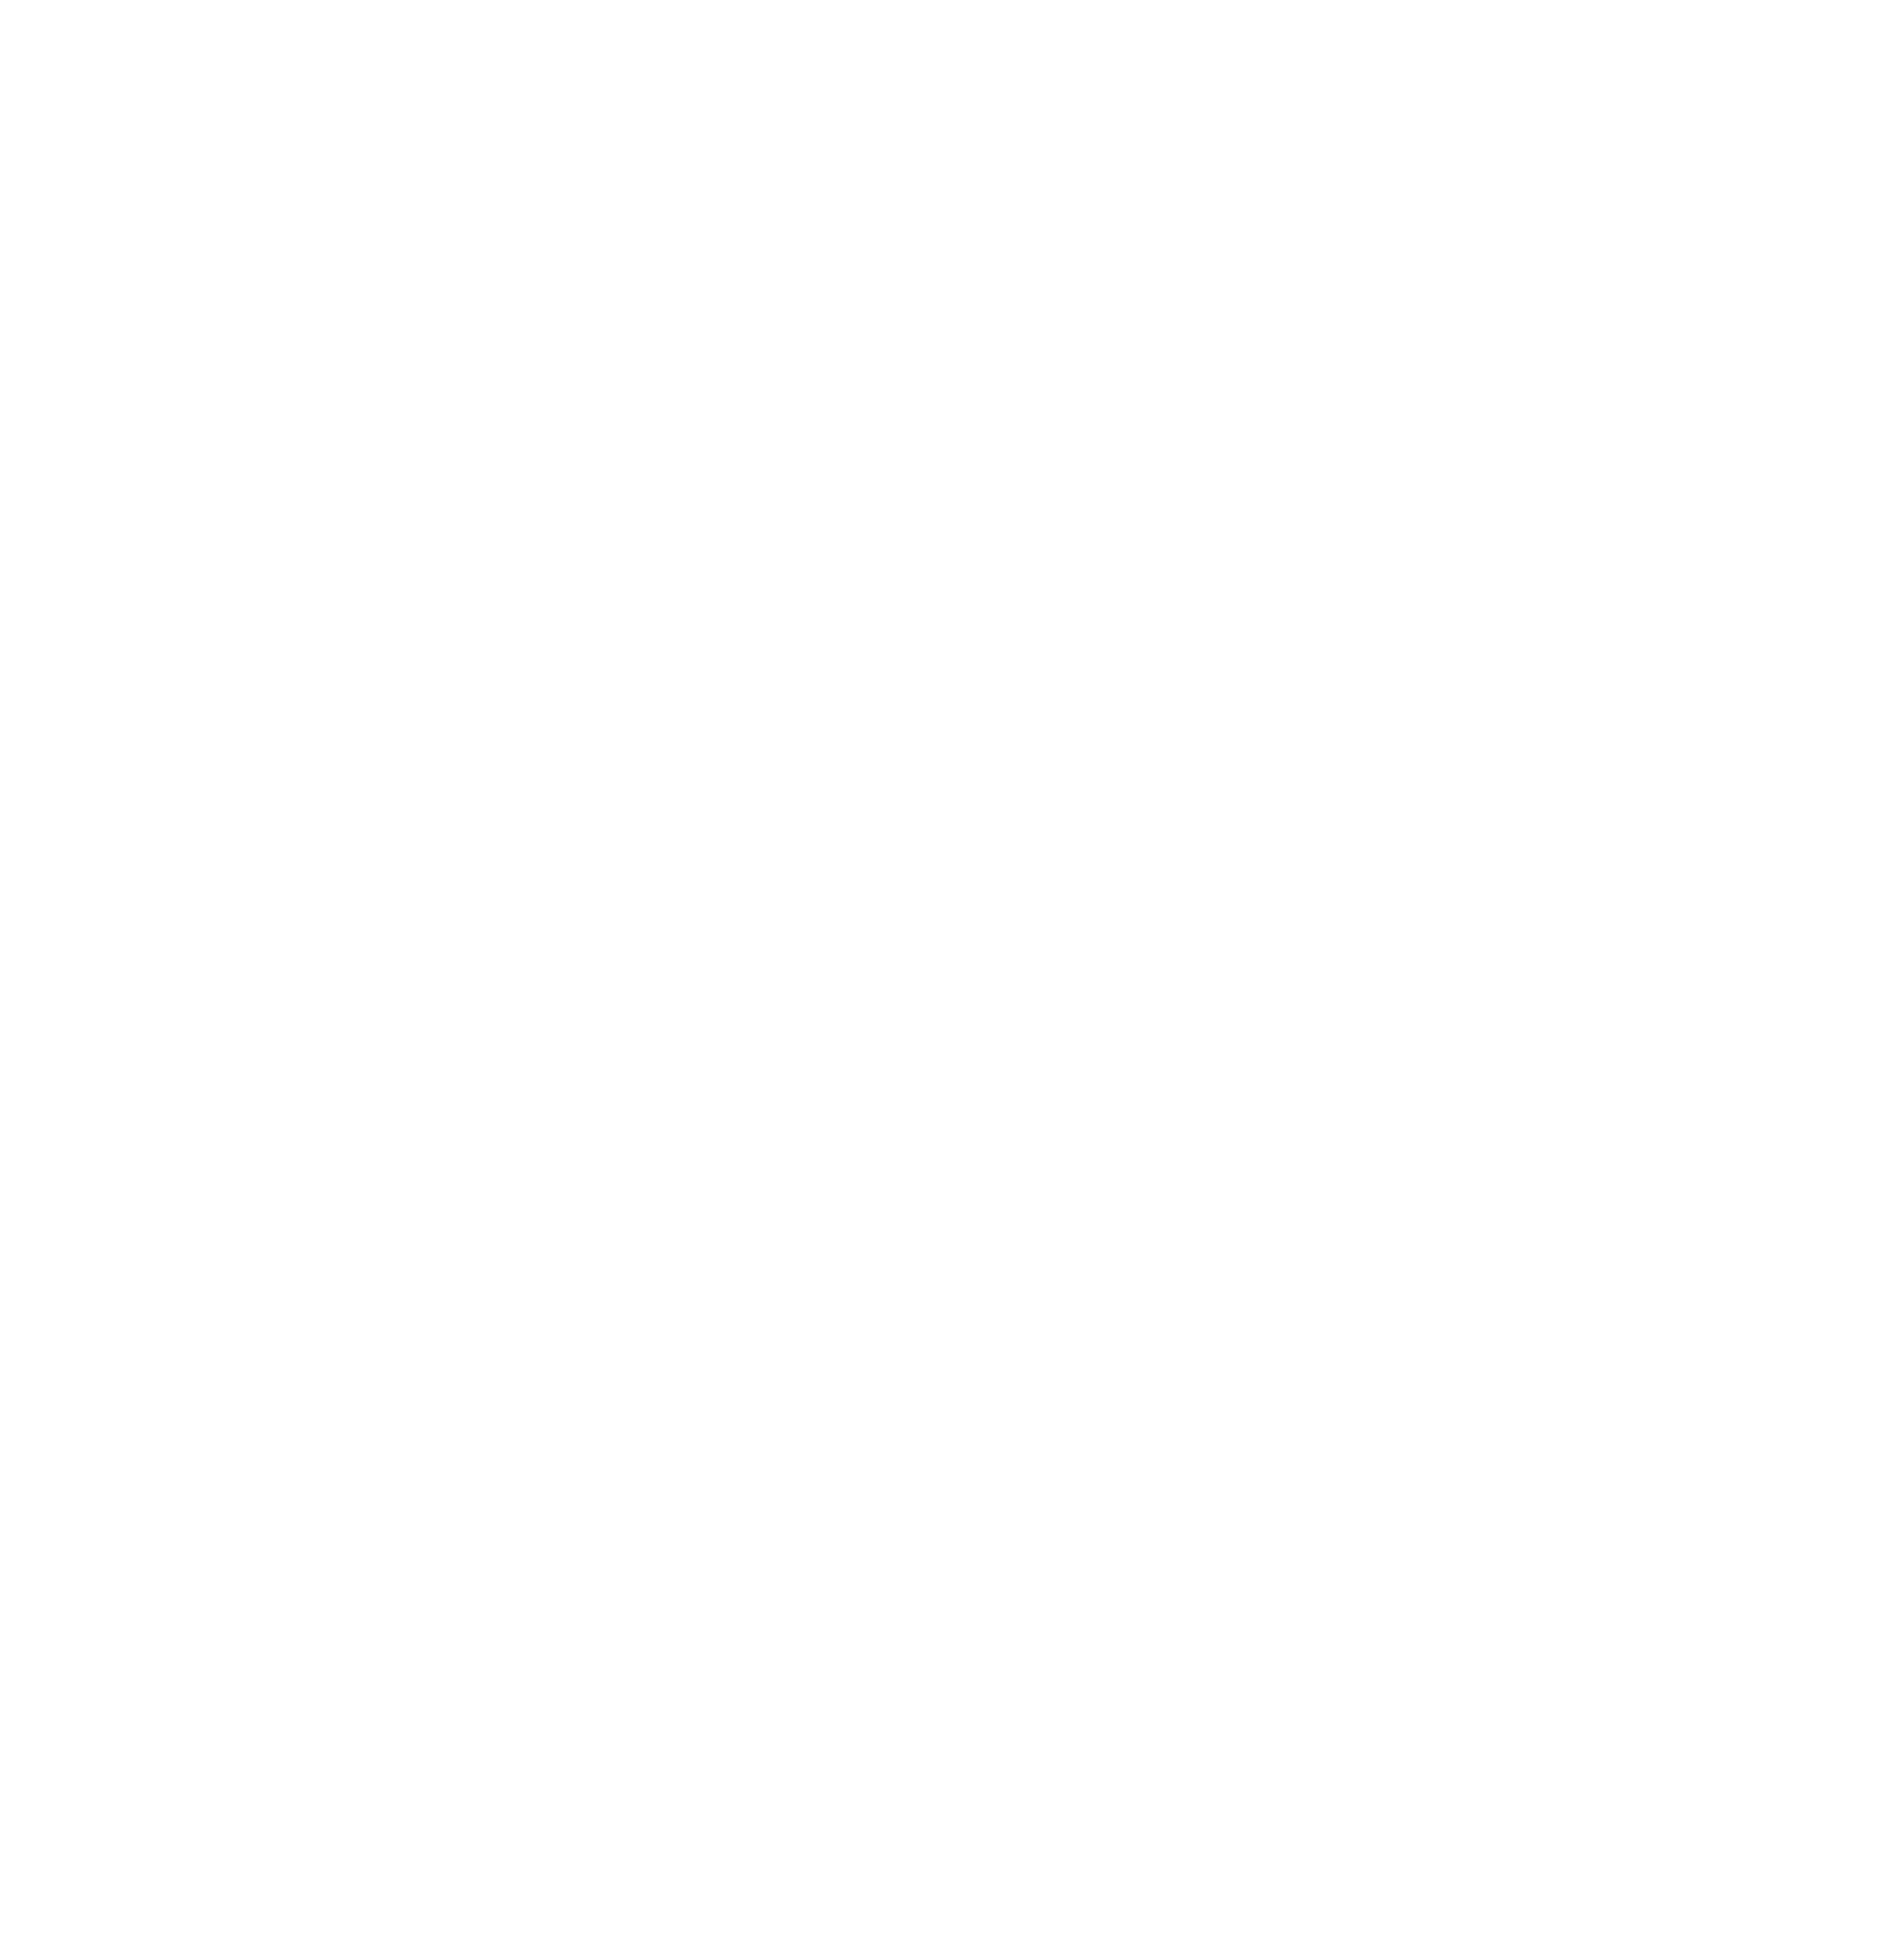 GEO Certification logos